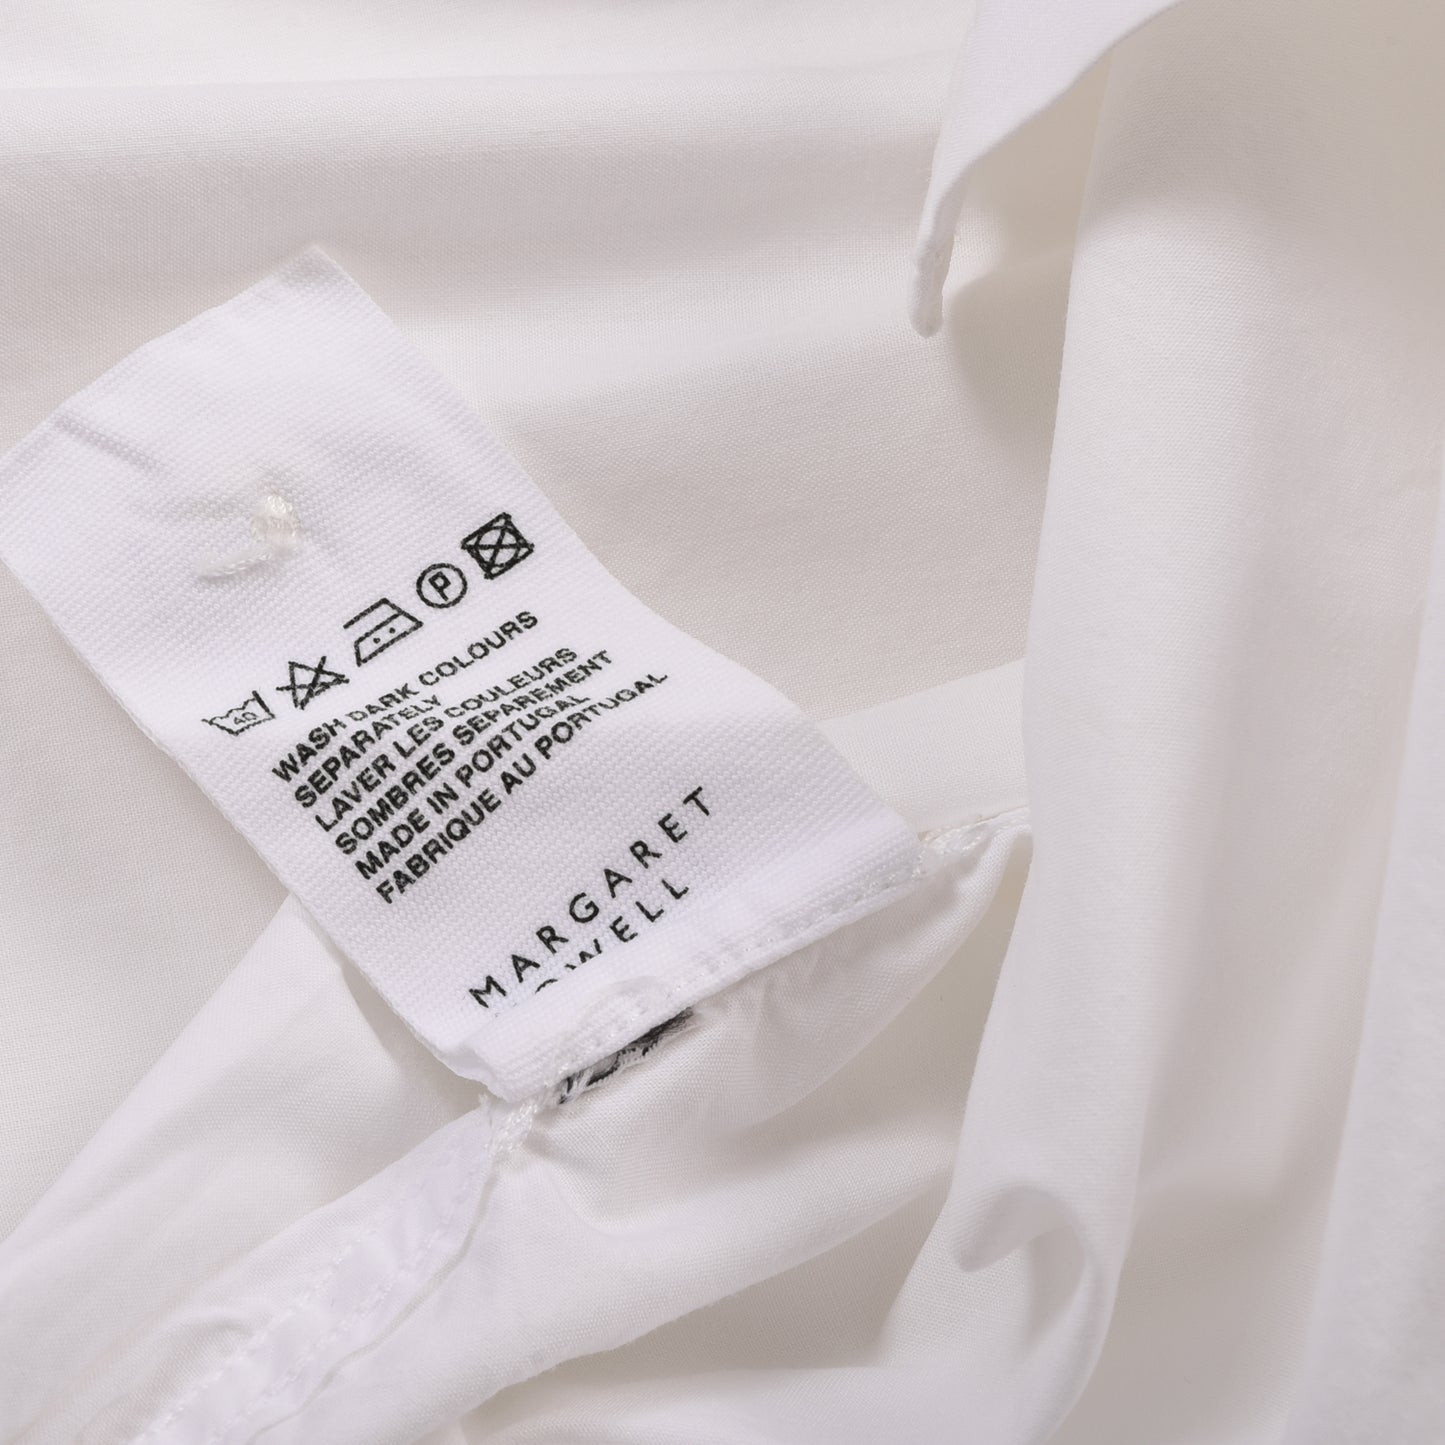 MHL DRESS SHIRT - WHITE